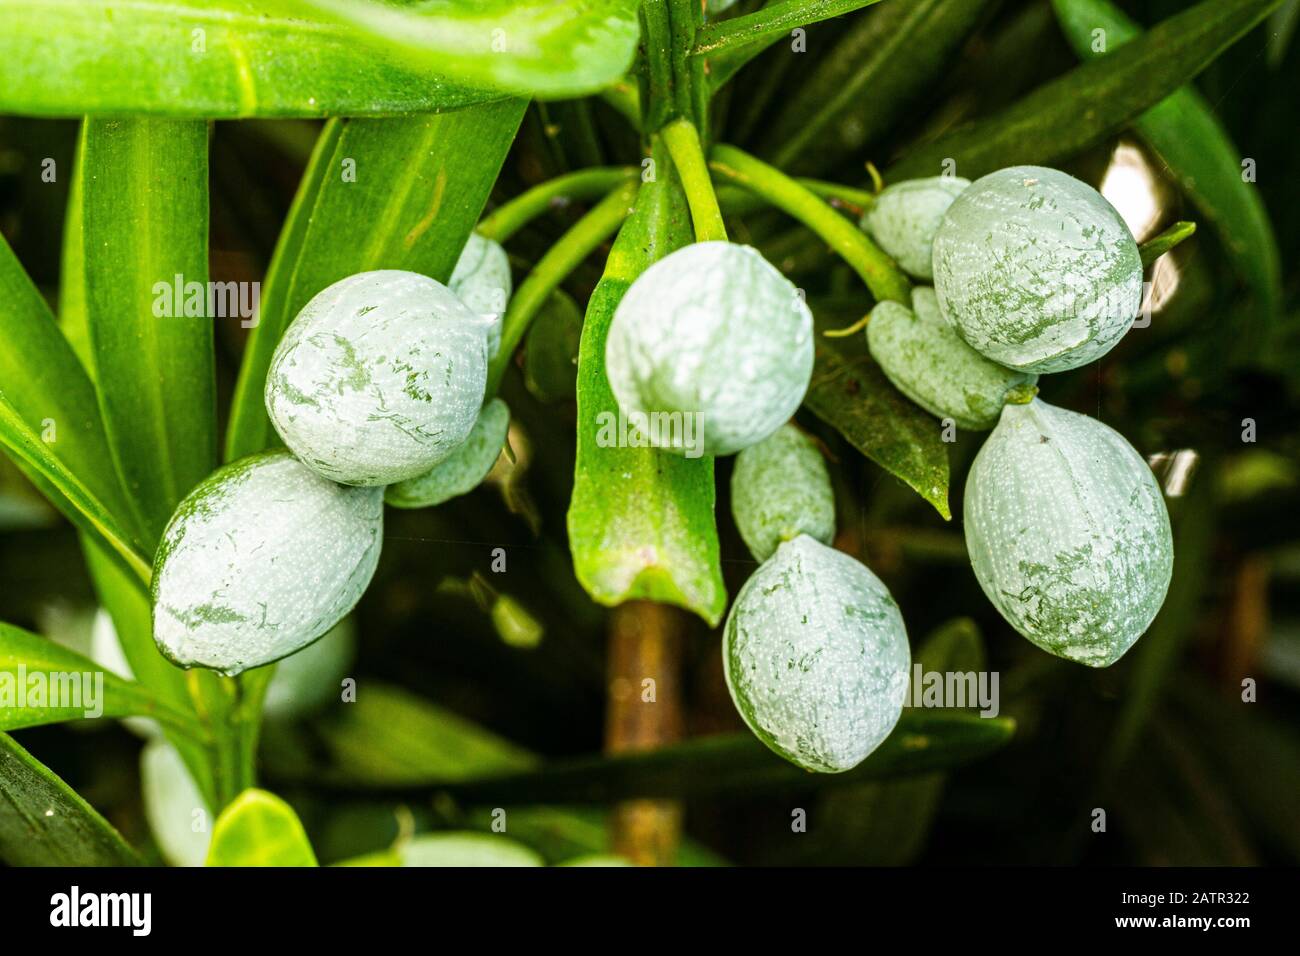 Podocarpus (Podocarpus macrophyllus) seeds. Florianopolis, Santa Catarina, Brazil. Stock Photo